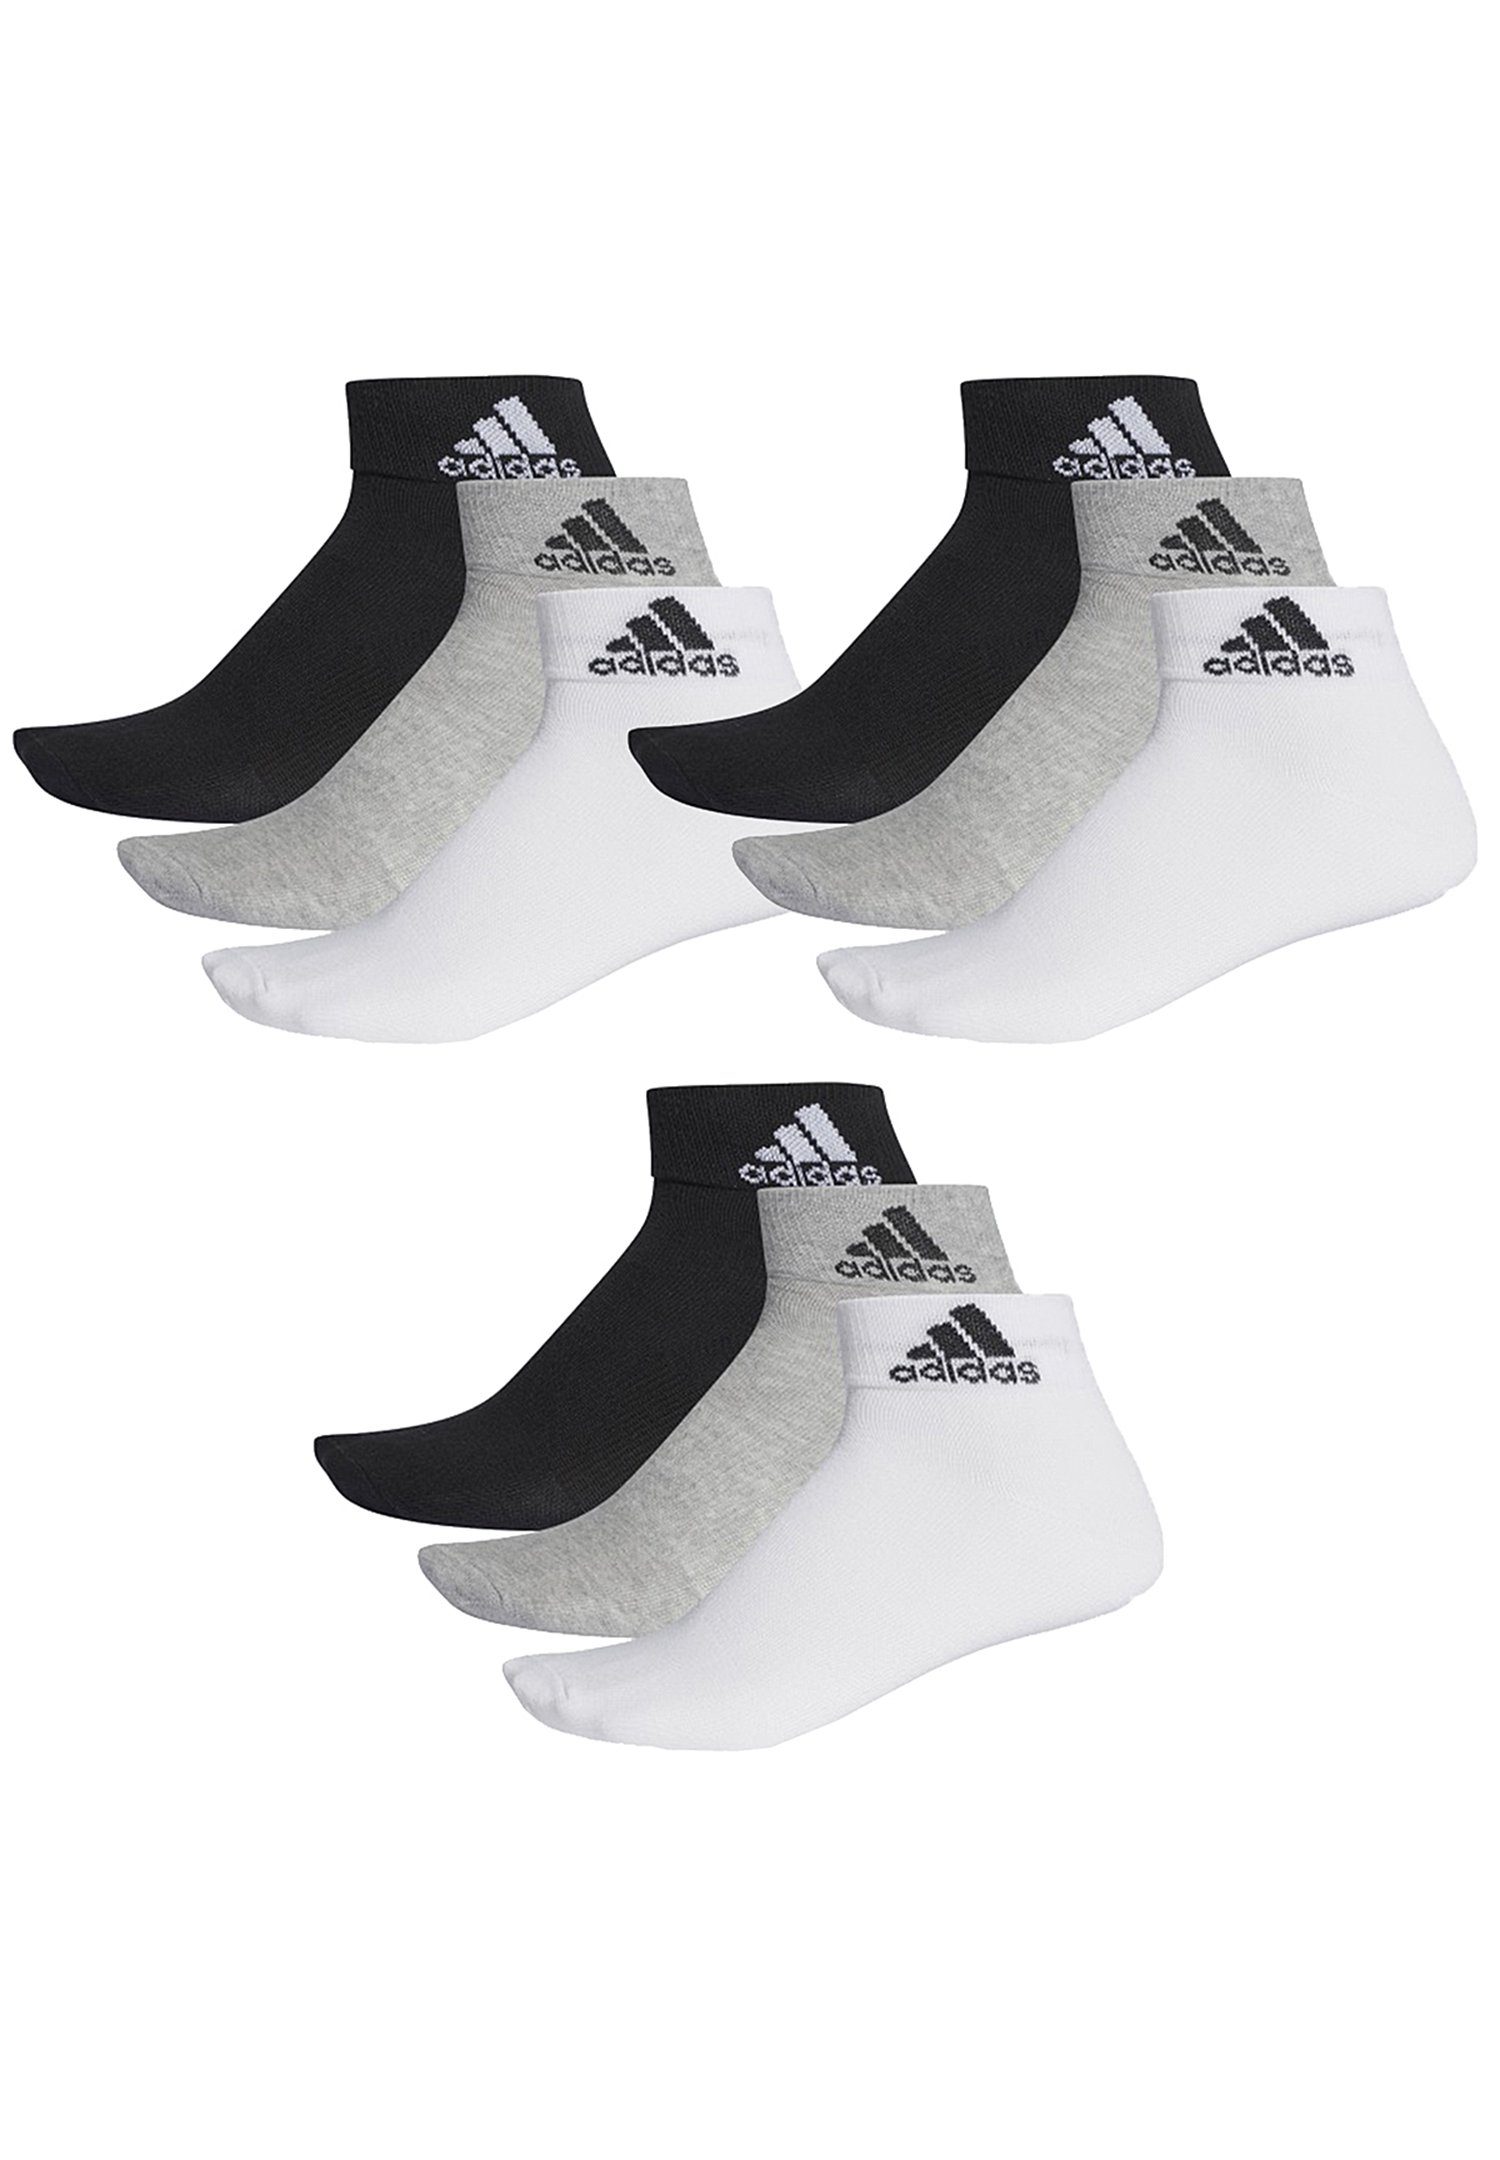 adidas (9-Paar) Performance Kurzsocken 803 9 grey/white/black Paar Ankle - Socken